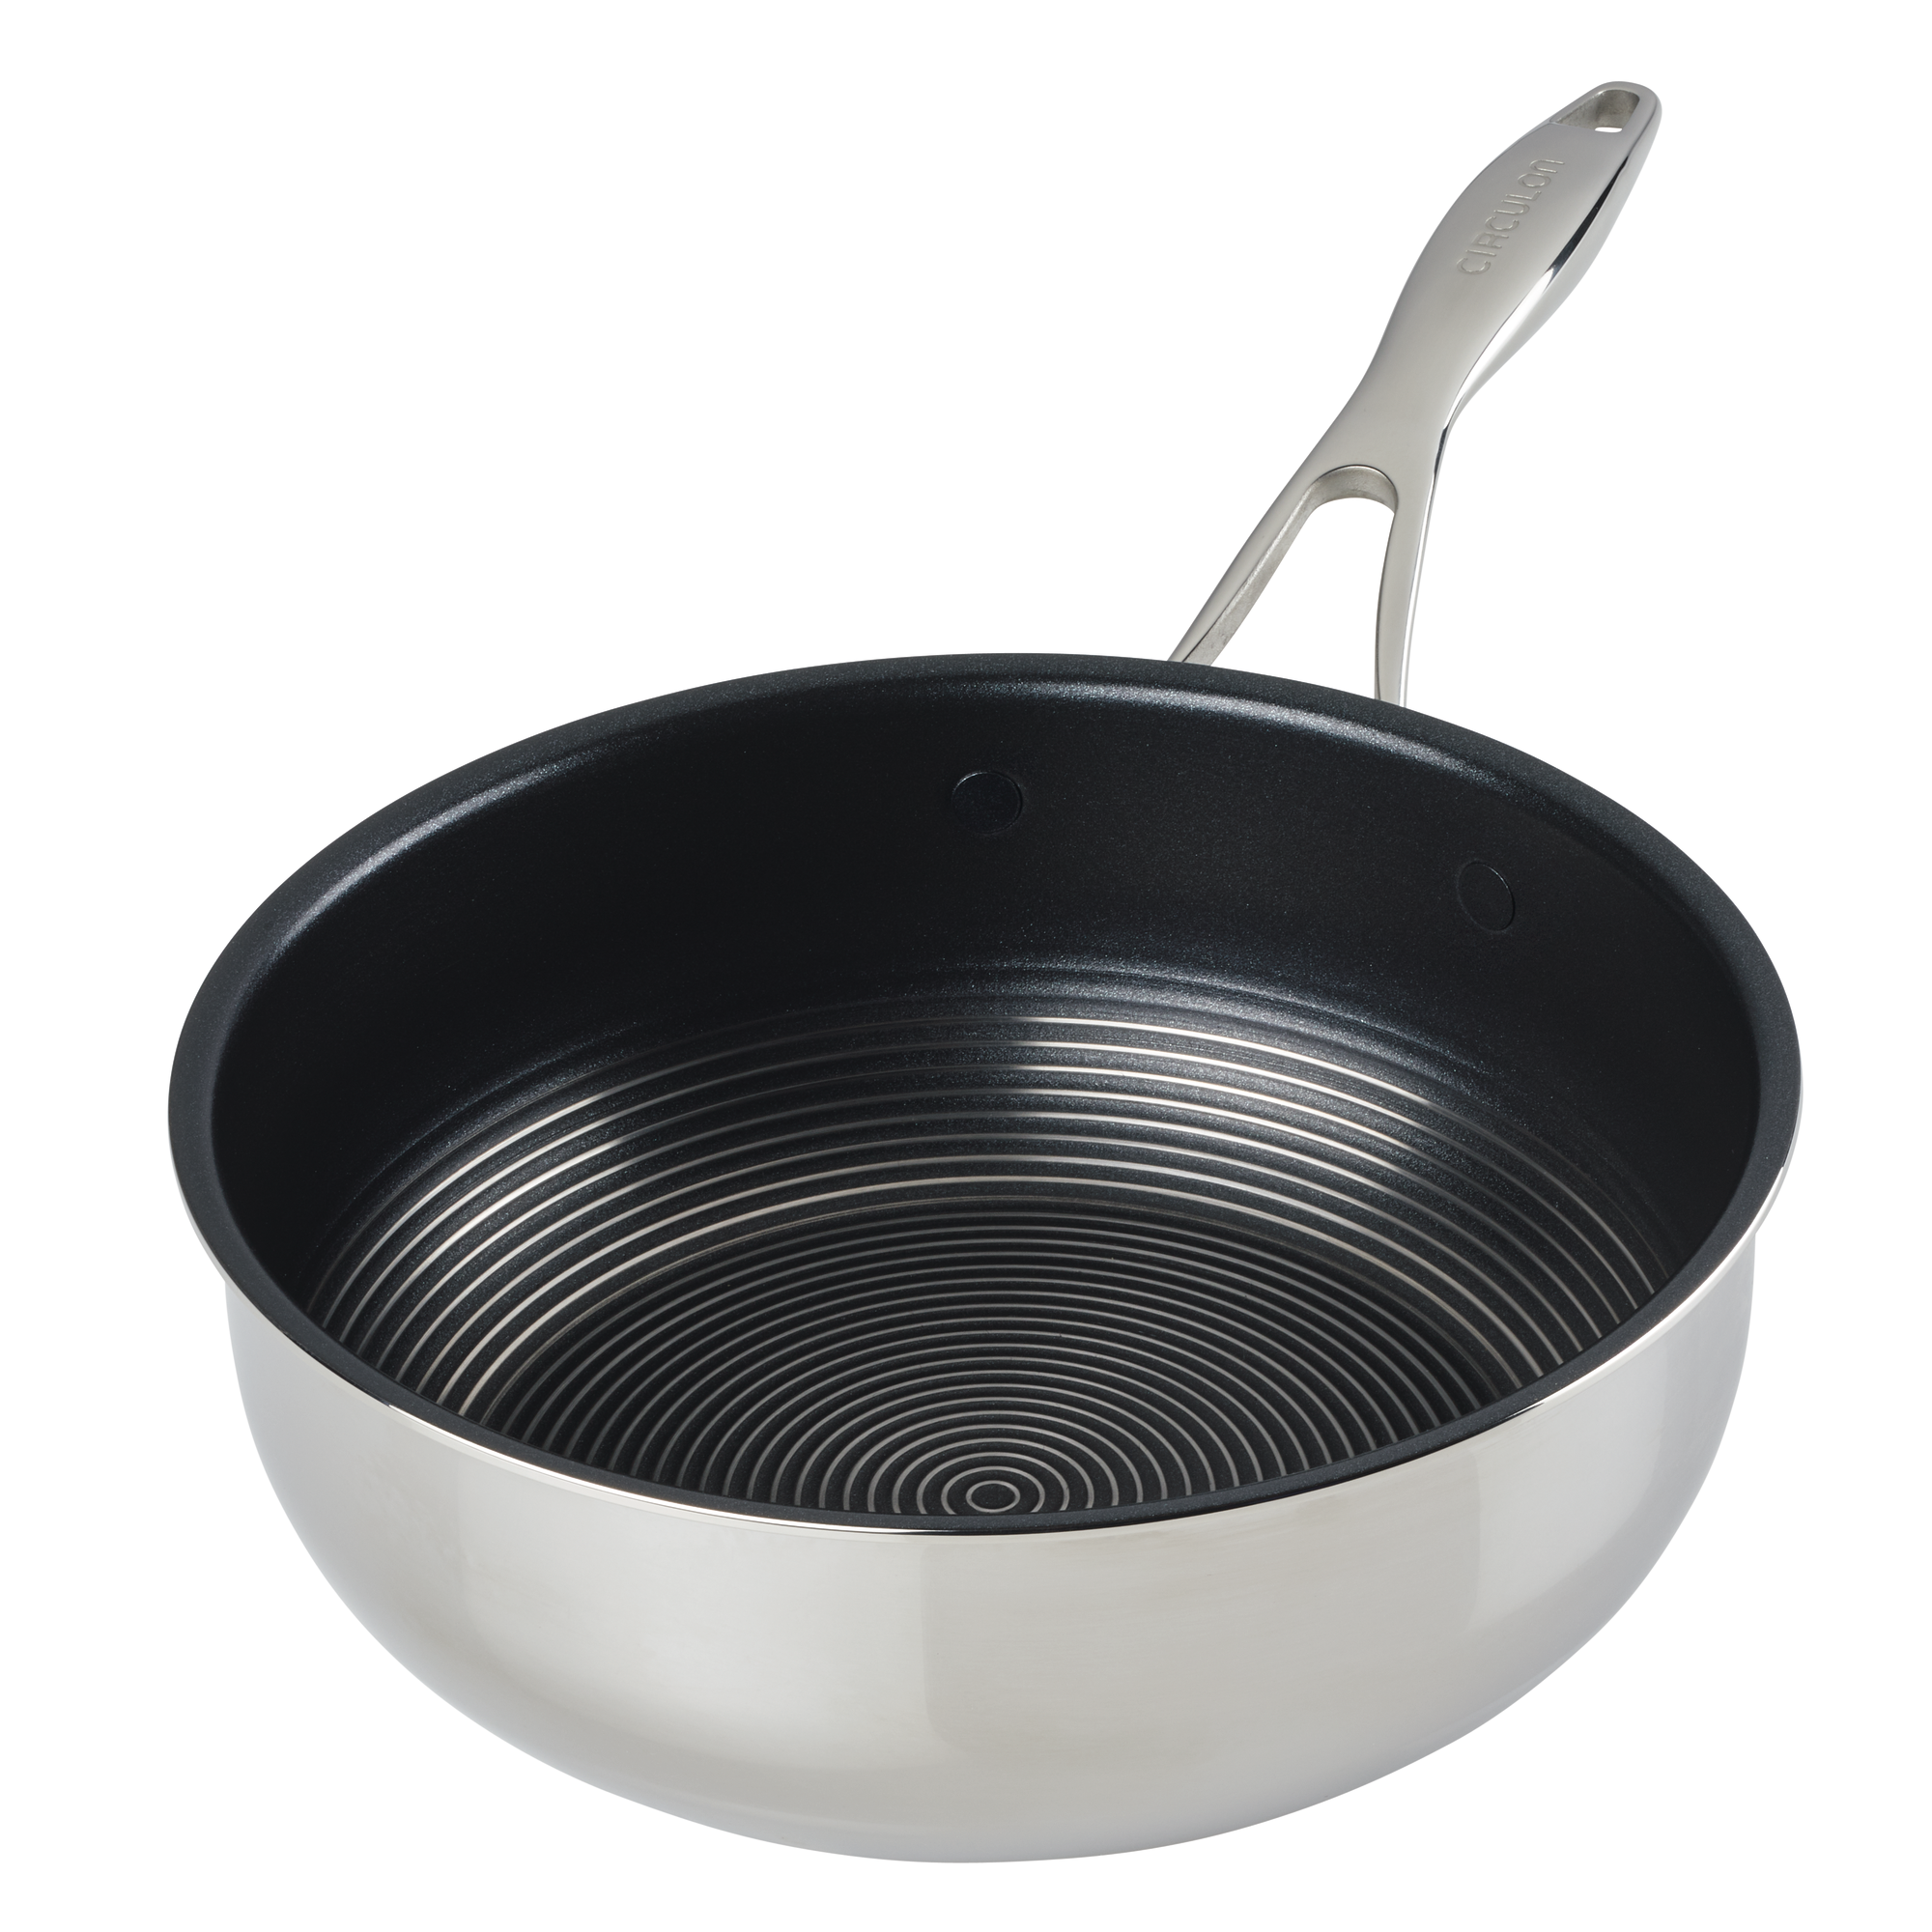 Circulon Nonstick Stainless Steel 3--Quart Covered Saute Pan 